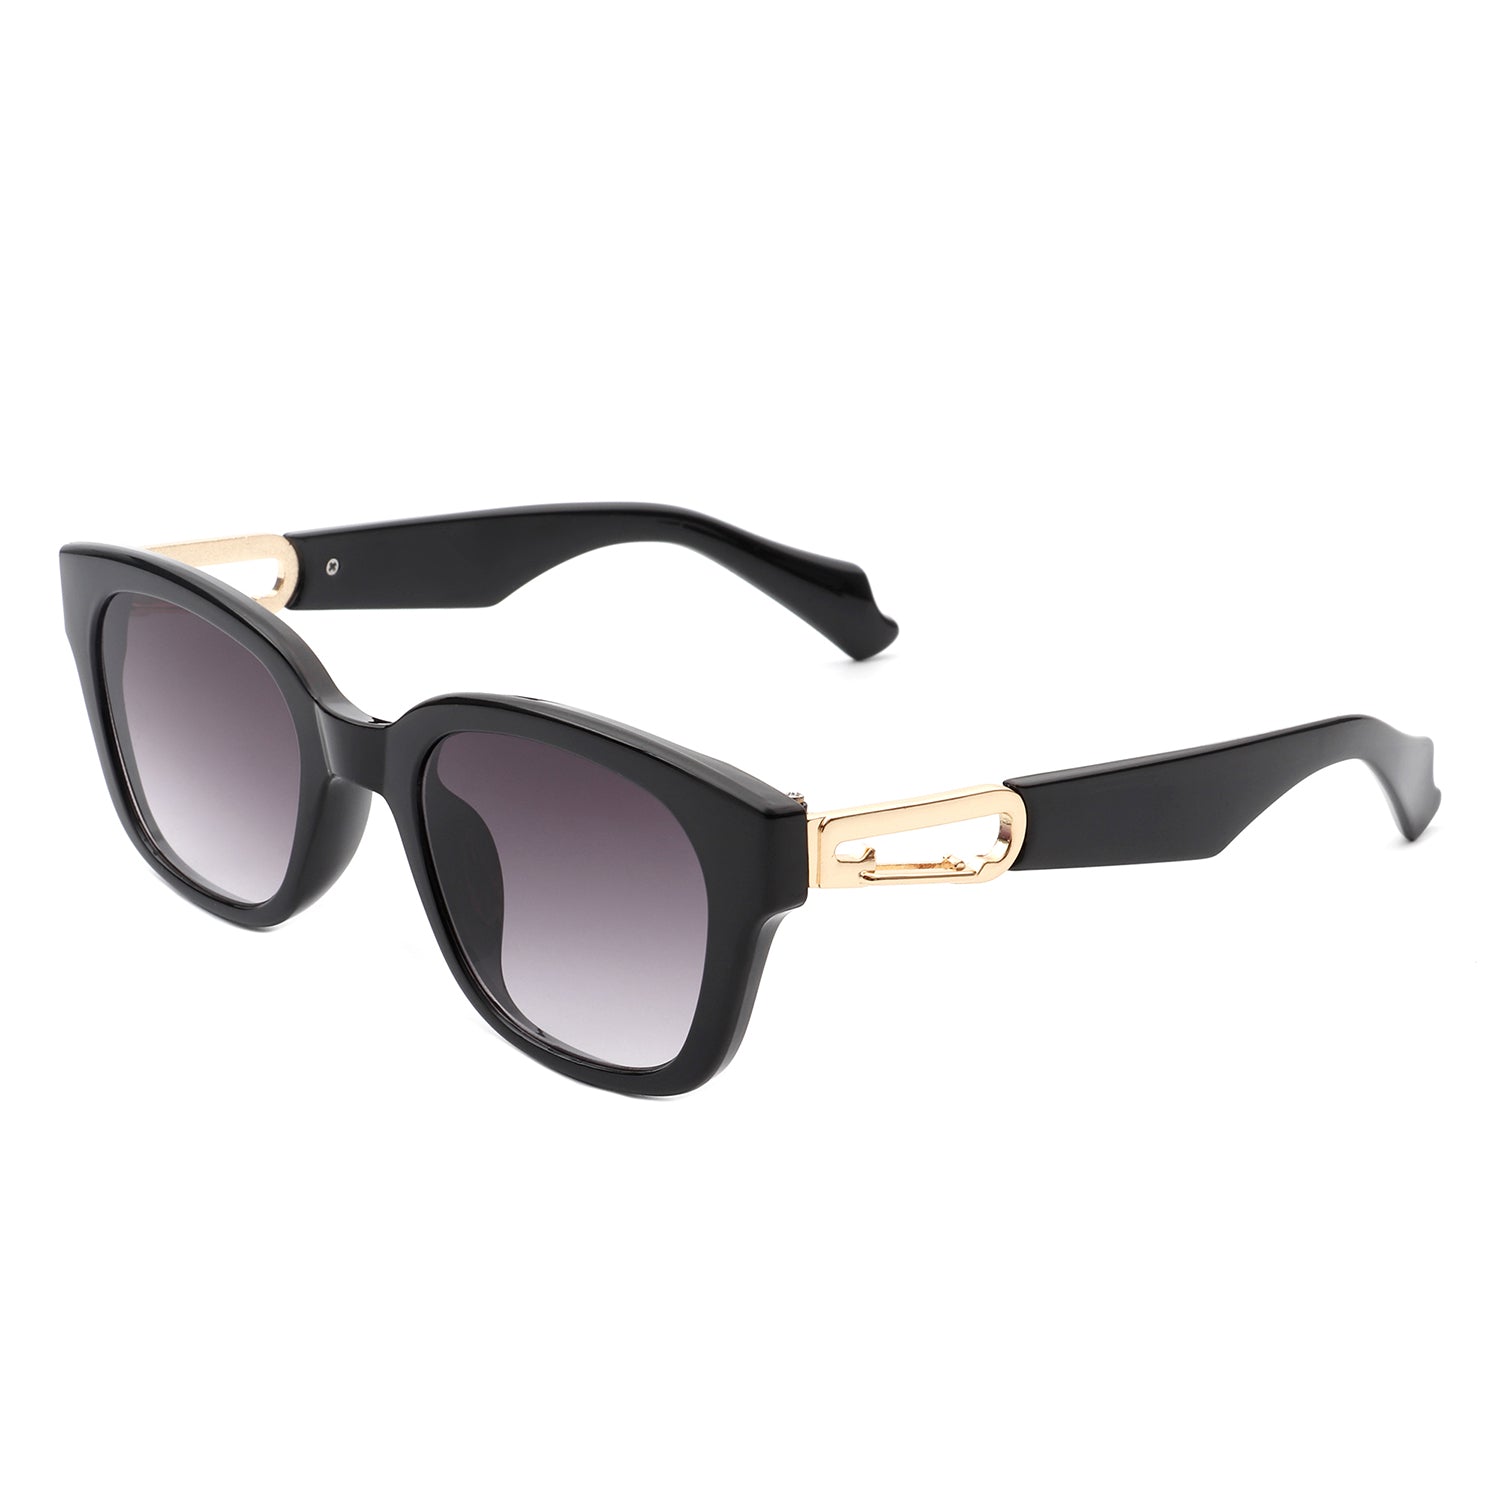 HS1103 - Classic Horn Rimmed Retro Square Women Fashion Sunglasses